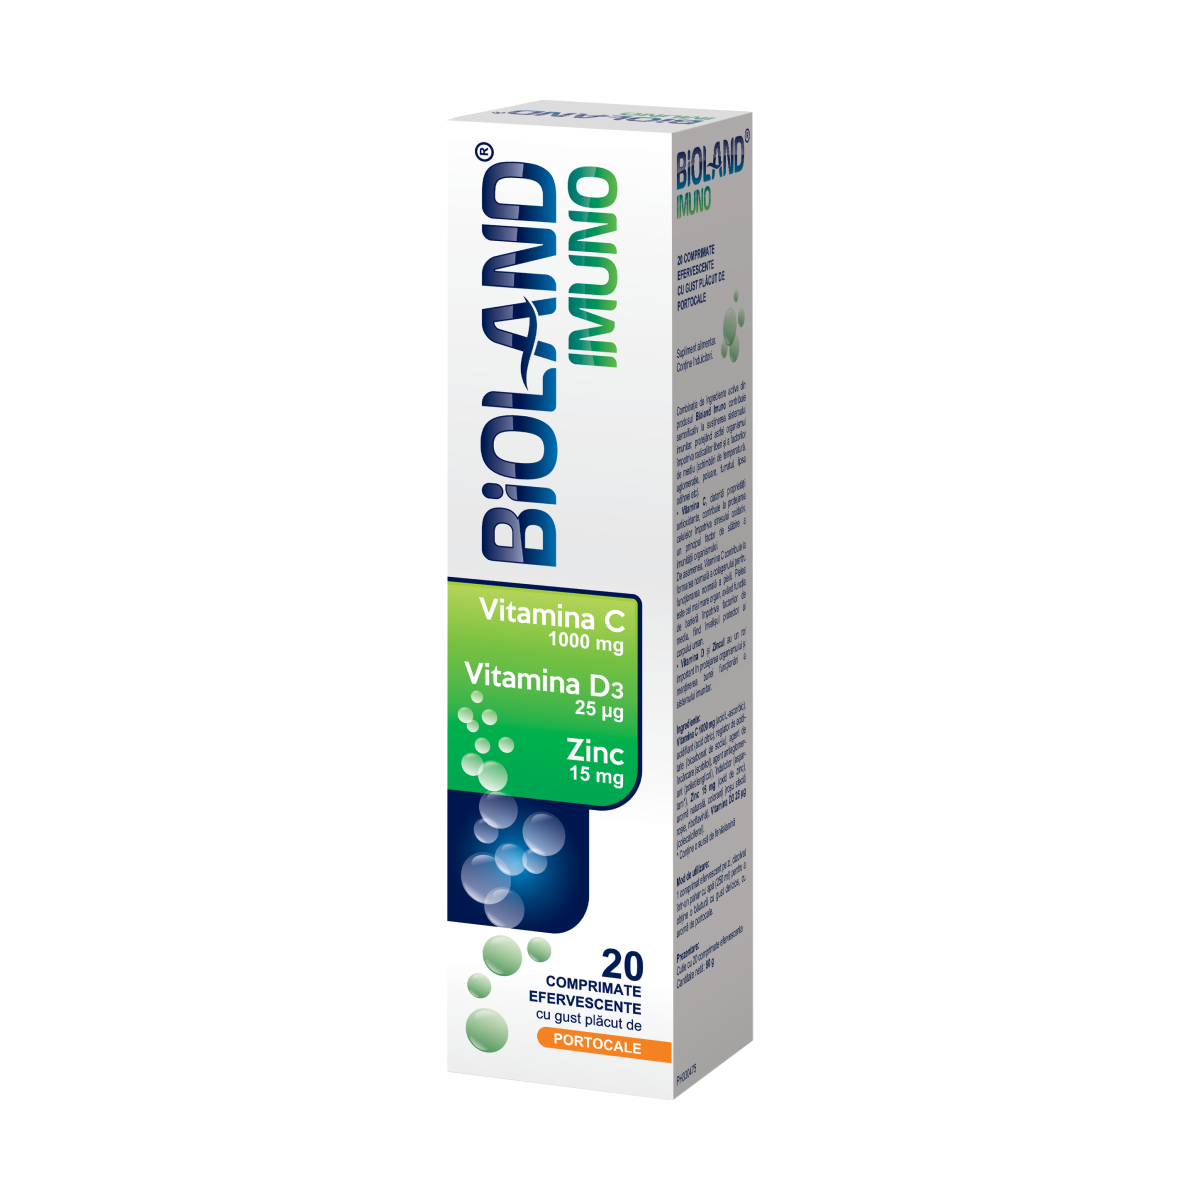 Bioland Imuno Vitamina C, 20 comprimate efervescente, Biofarm